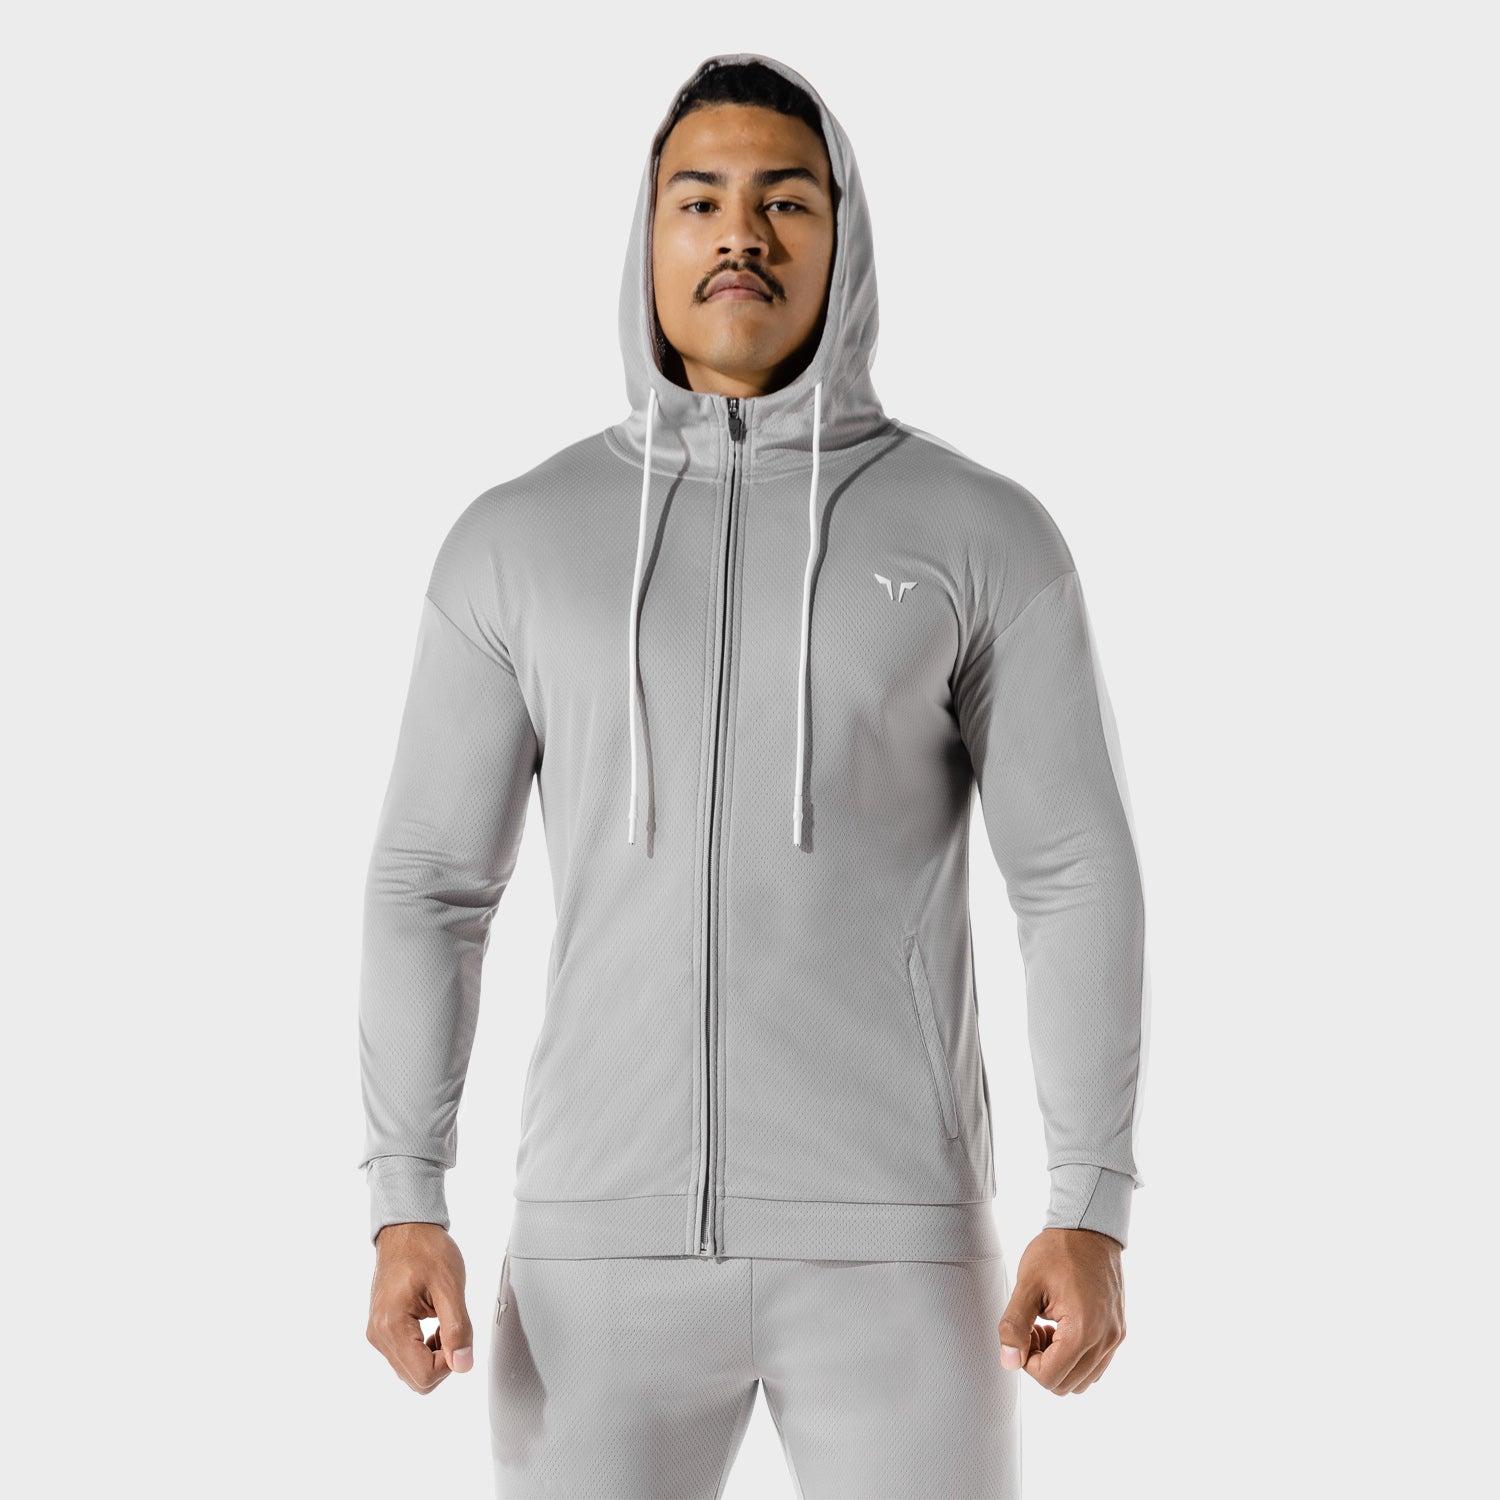 squatwolf-gym-wear-hybrid-zip-up-grey-workout-hoodies-for-men